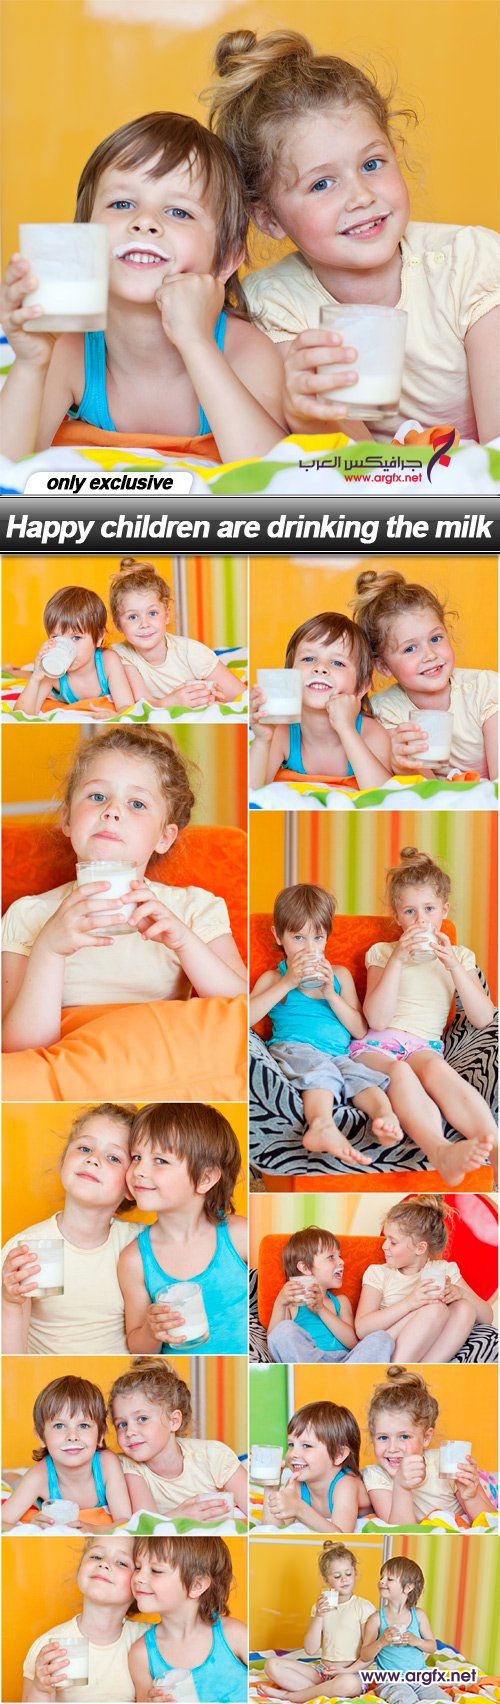 Happy children are drinking the milk - 10 UHQ JPEG